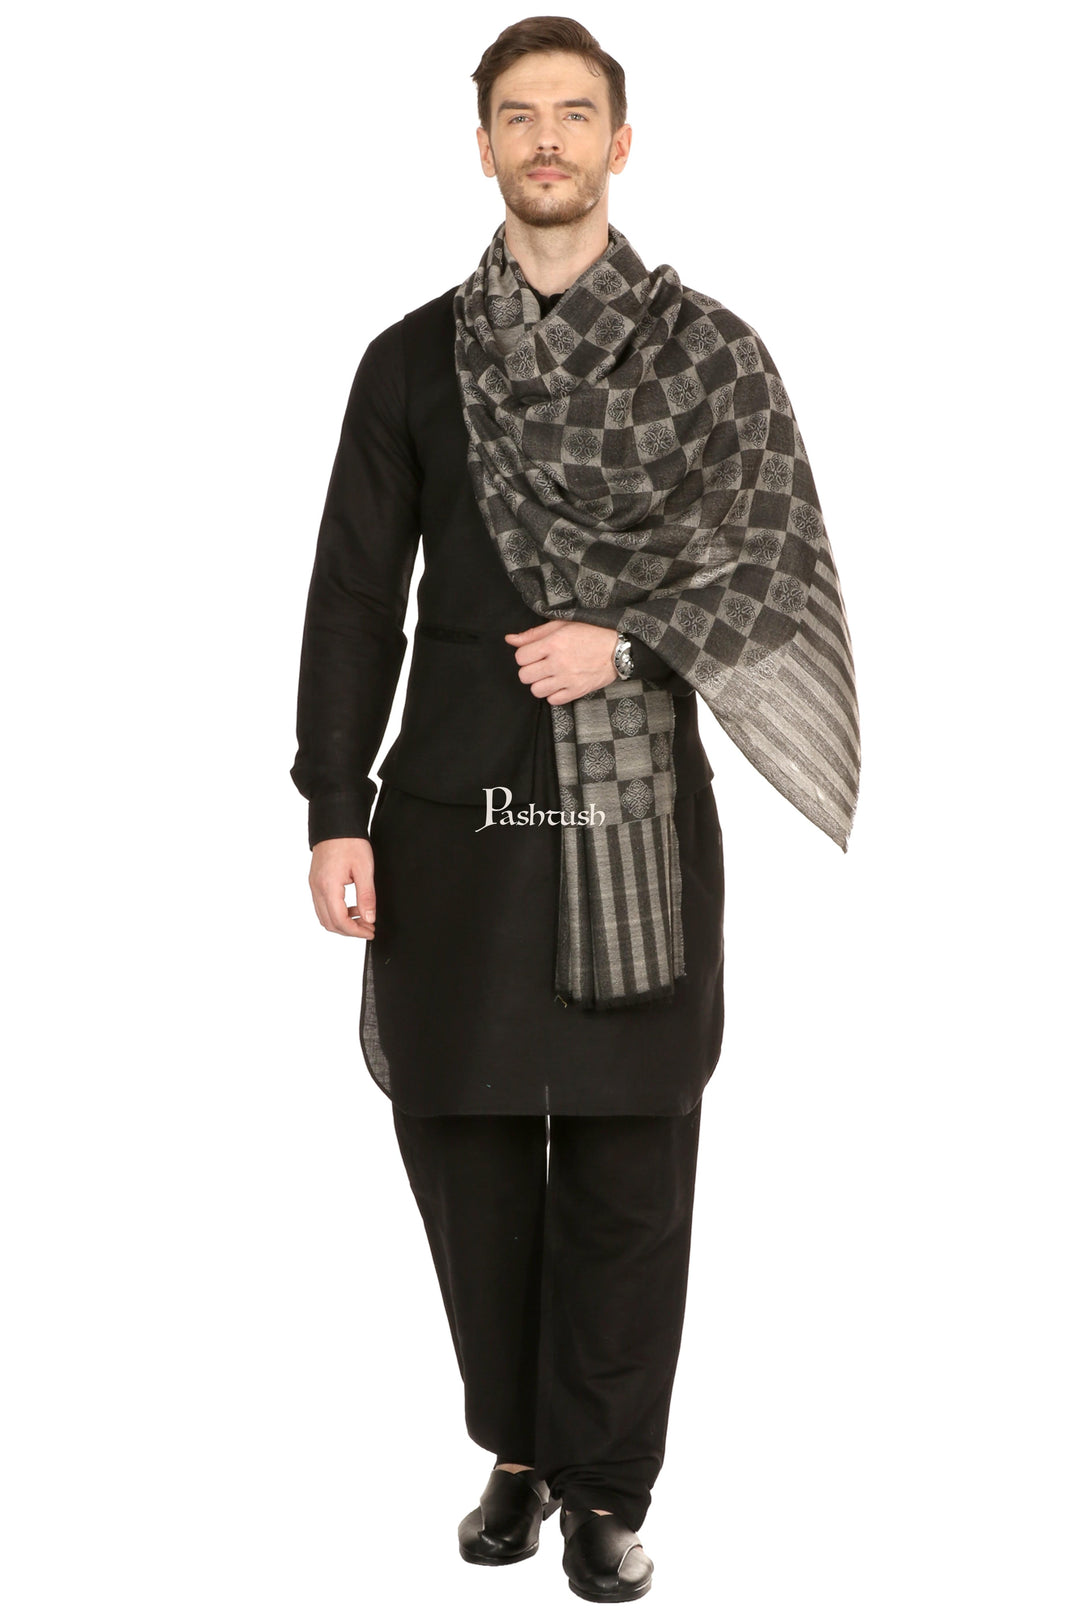 Pashtush India Mens Scarves Stoles and Mufflers Pashtush Mens Reversible Stole, Checkered Design - Black